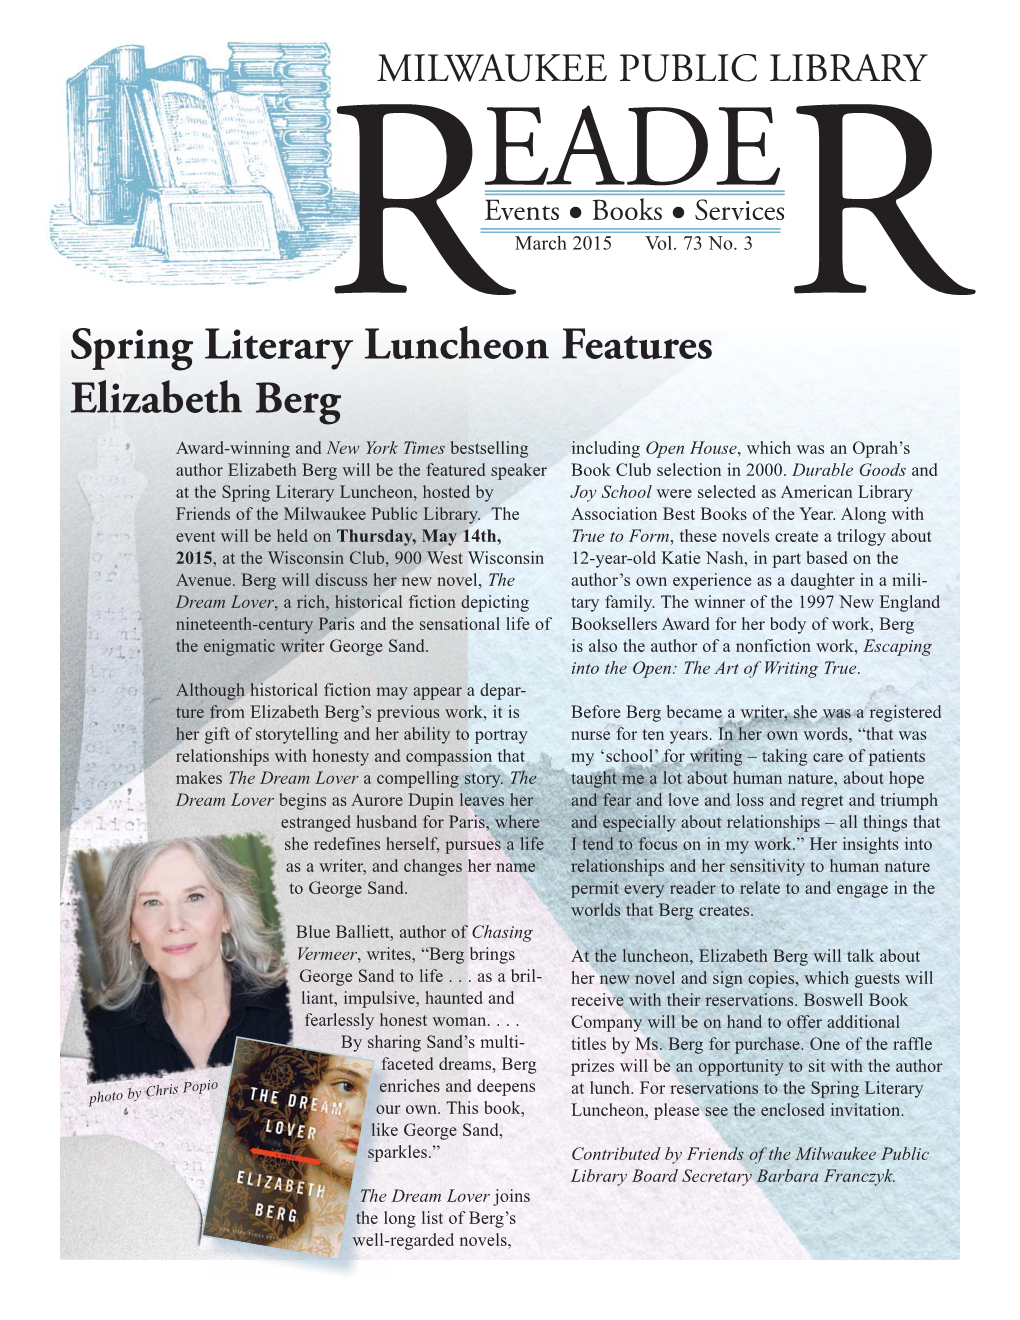 Spring Literary Luncheon Features Elizabeth Berg